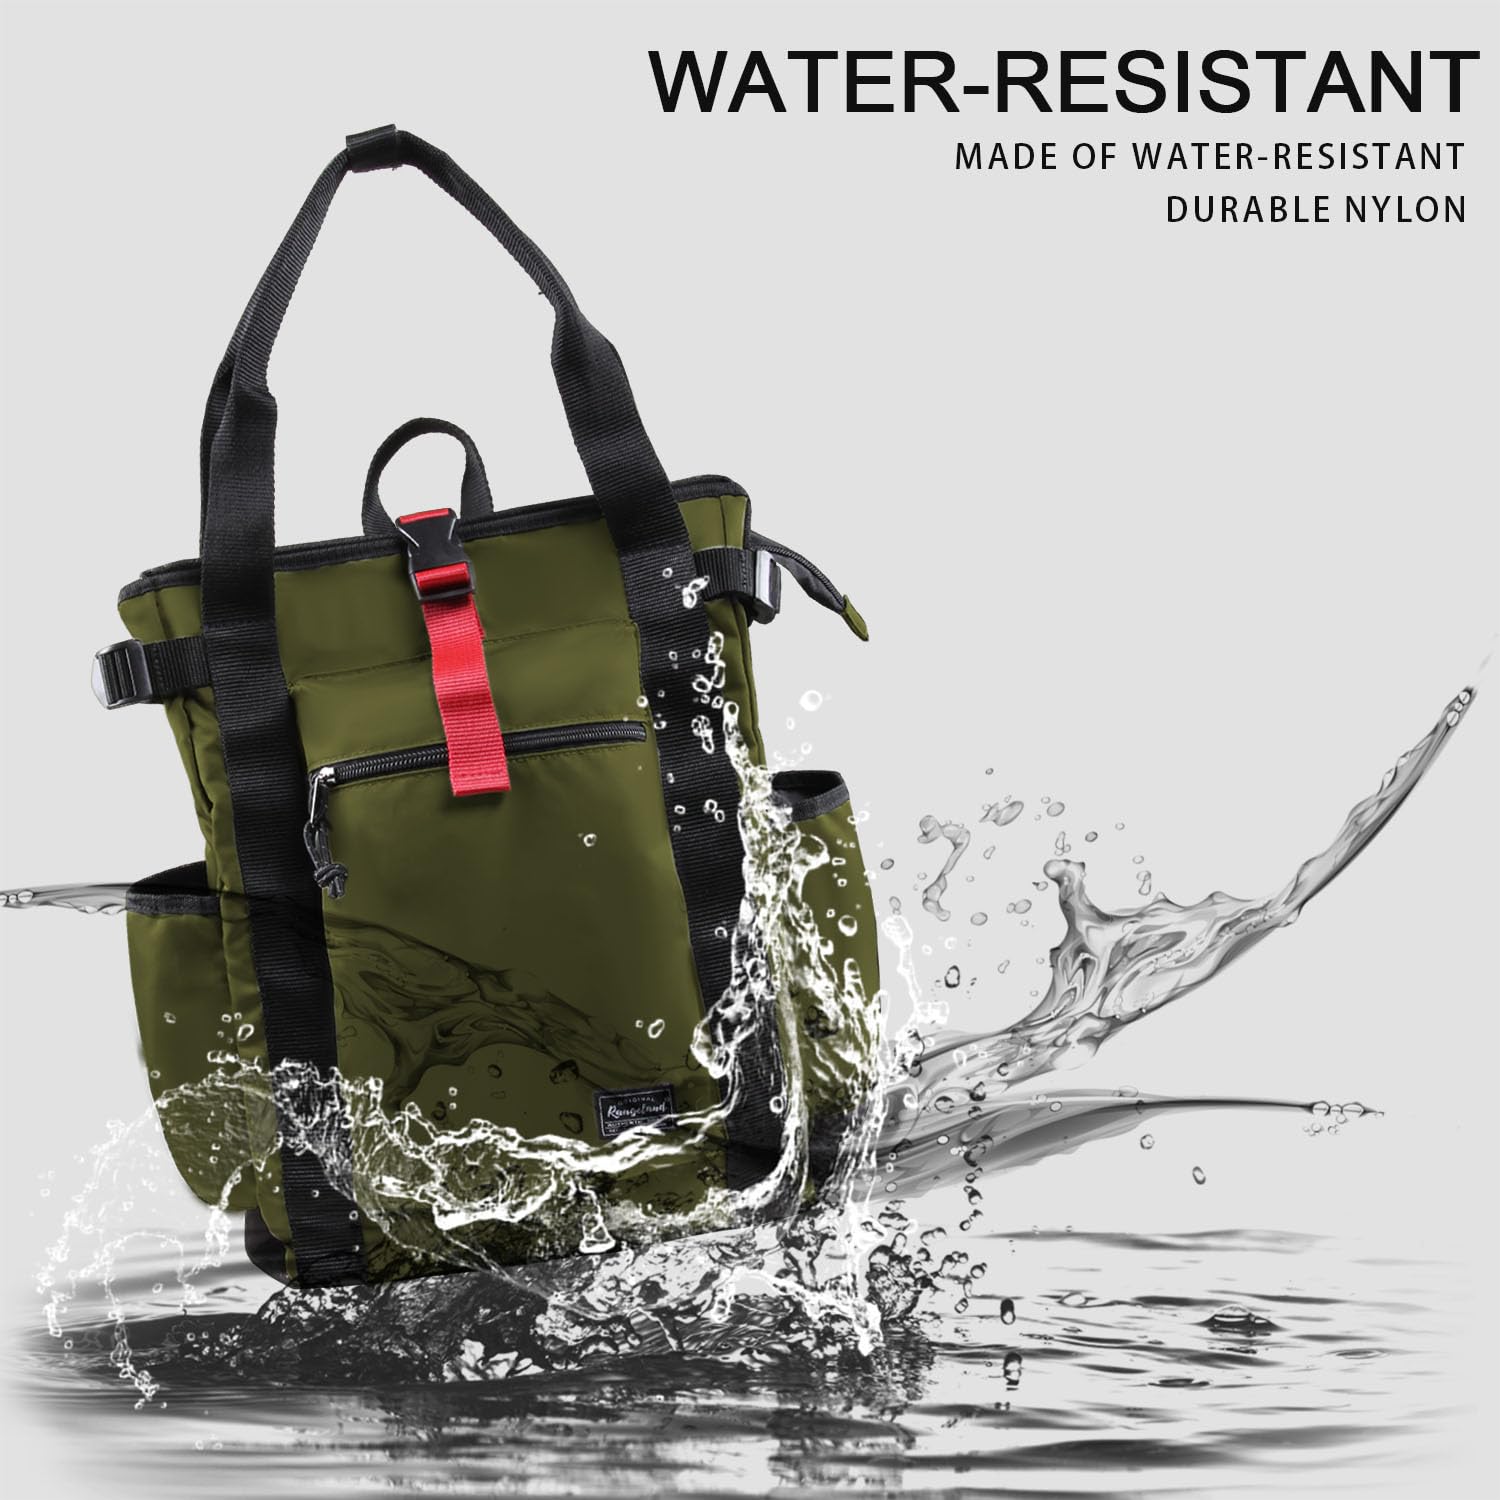 Rangeland Unisex Laptop Tote Backpack Convertible Lightweight Nylon Water-Resistant Everyday Shoulder Tote bag Backpack with Water Bottle Pocket Work Travel, Blue Navy